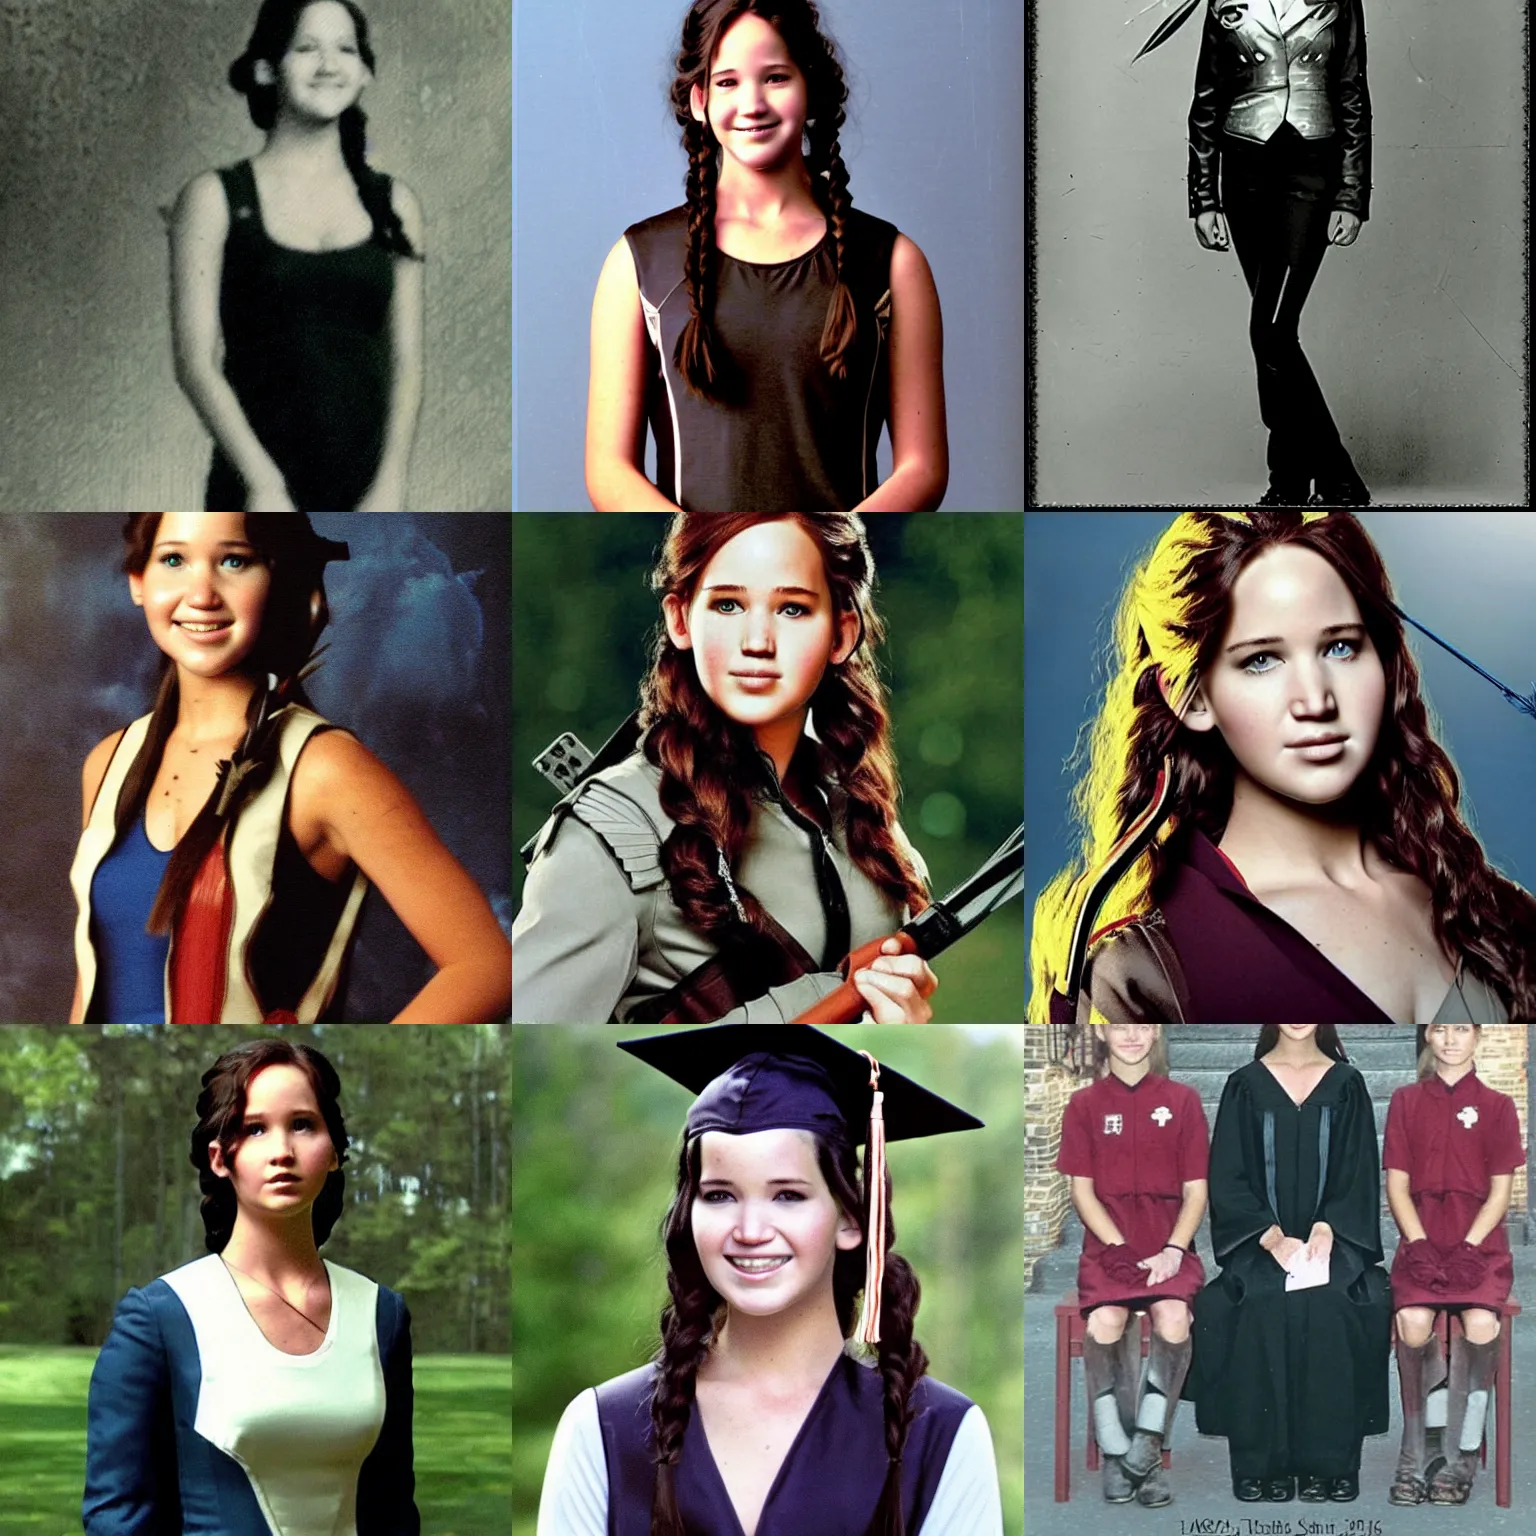 Prompt: High school graduation photo of Katniss Everdeen